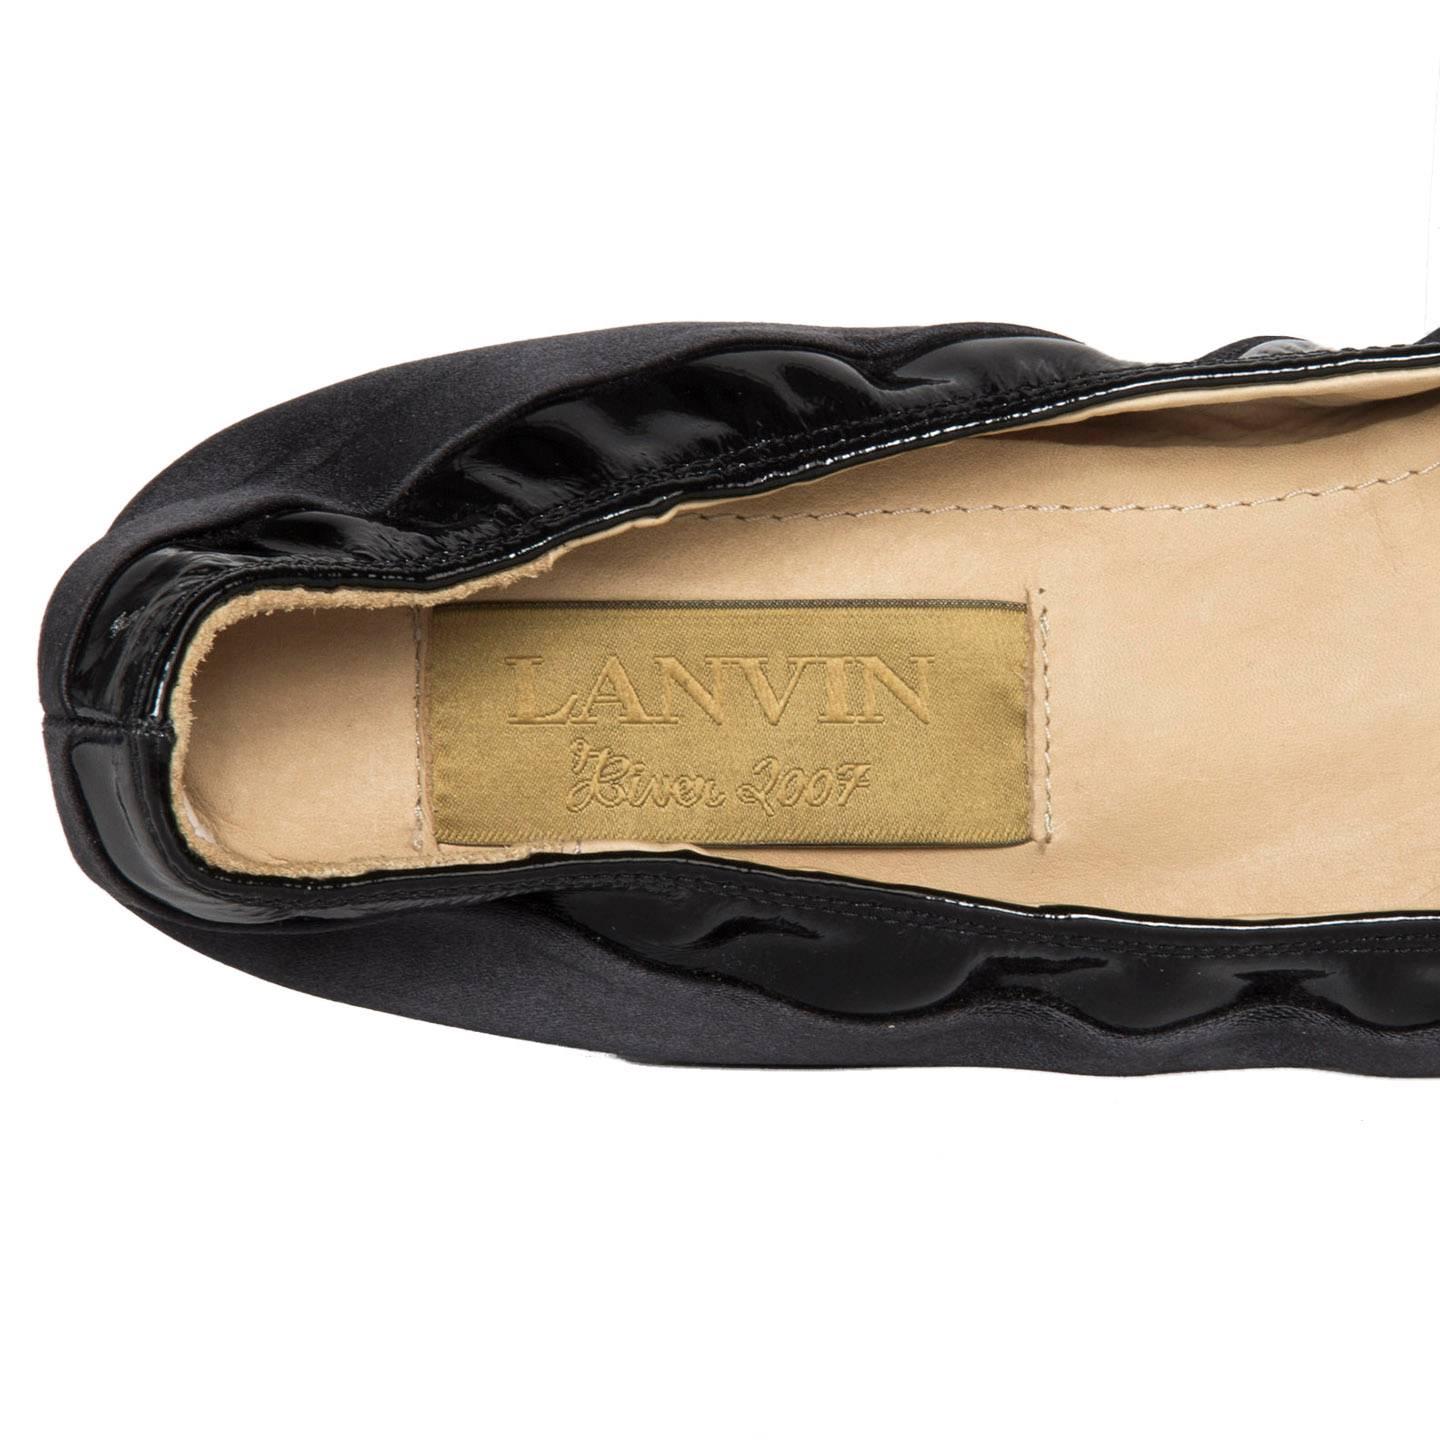 Lanvin Black Satin & Patent Leather Ballerinas For Sale 1